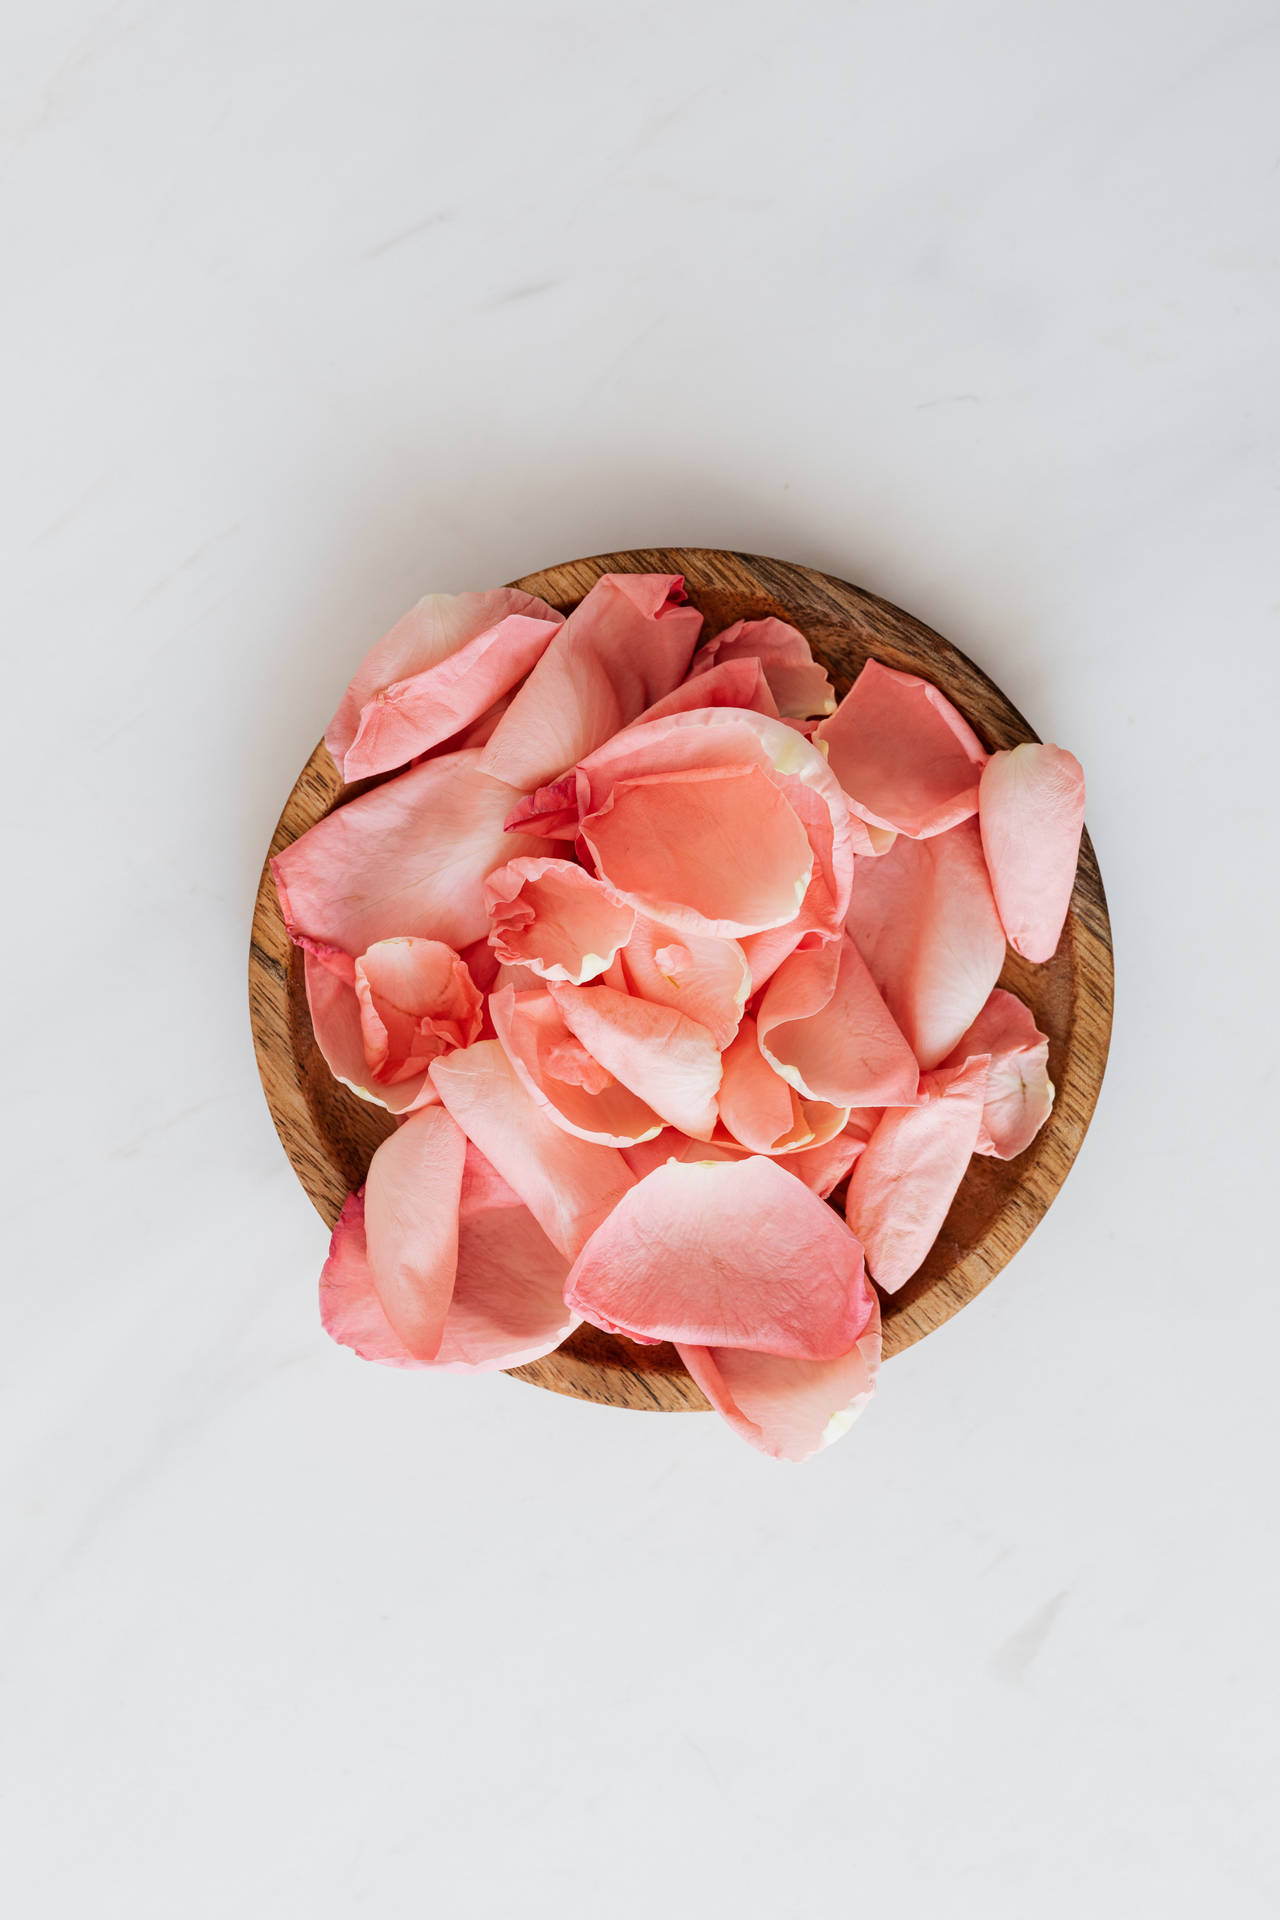 Bowl Of Pink Rose Petals Background